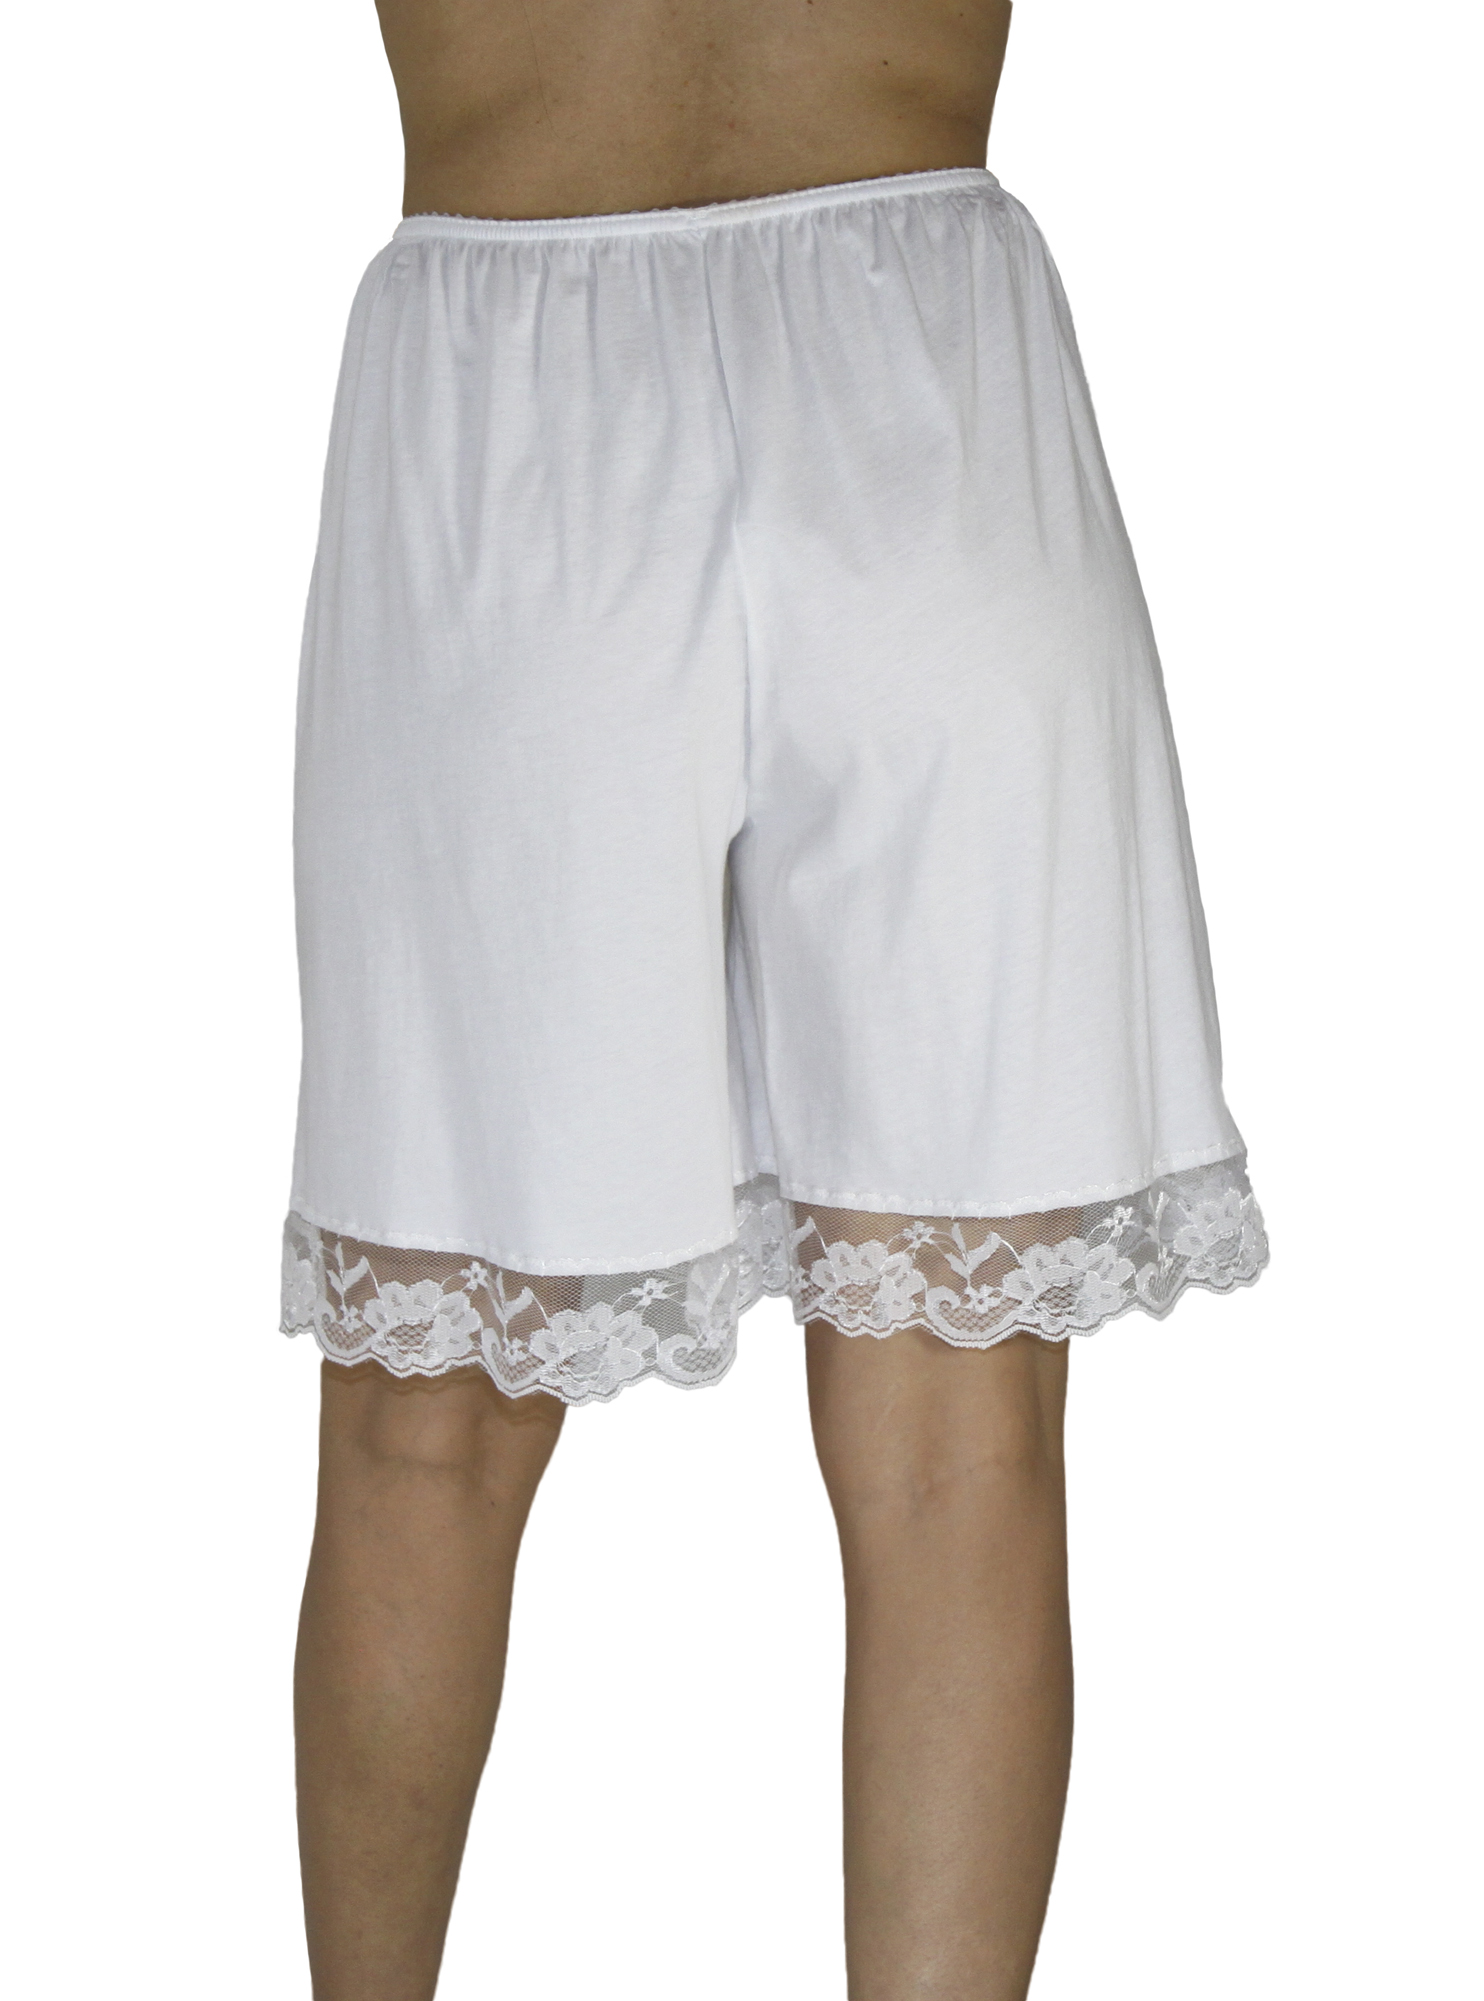 Underworks Pettipants Cotton Knit Culotte Slip Bloomers Split Skirt 9 ...